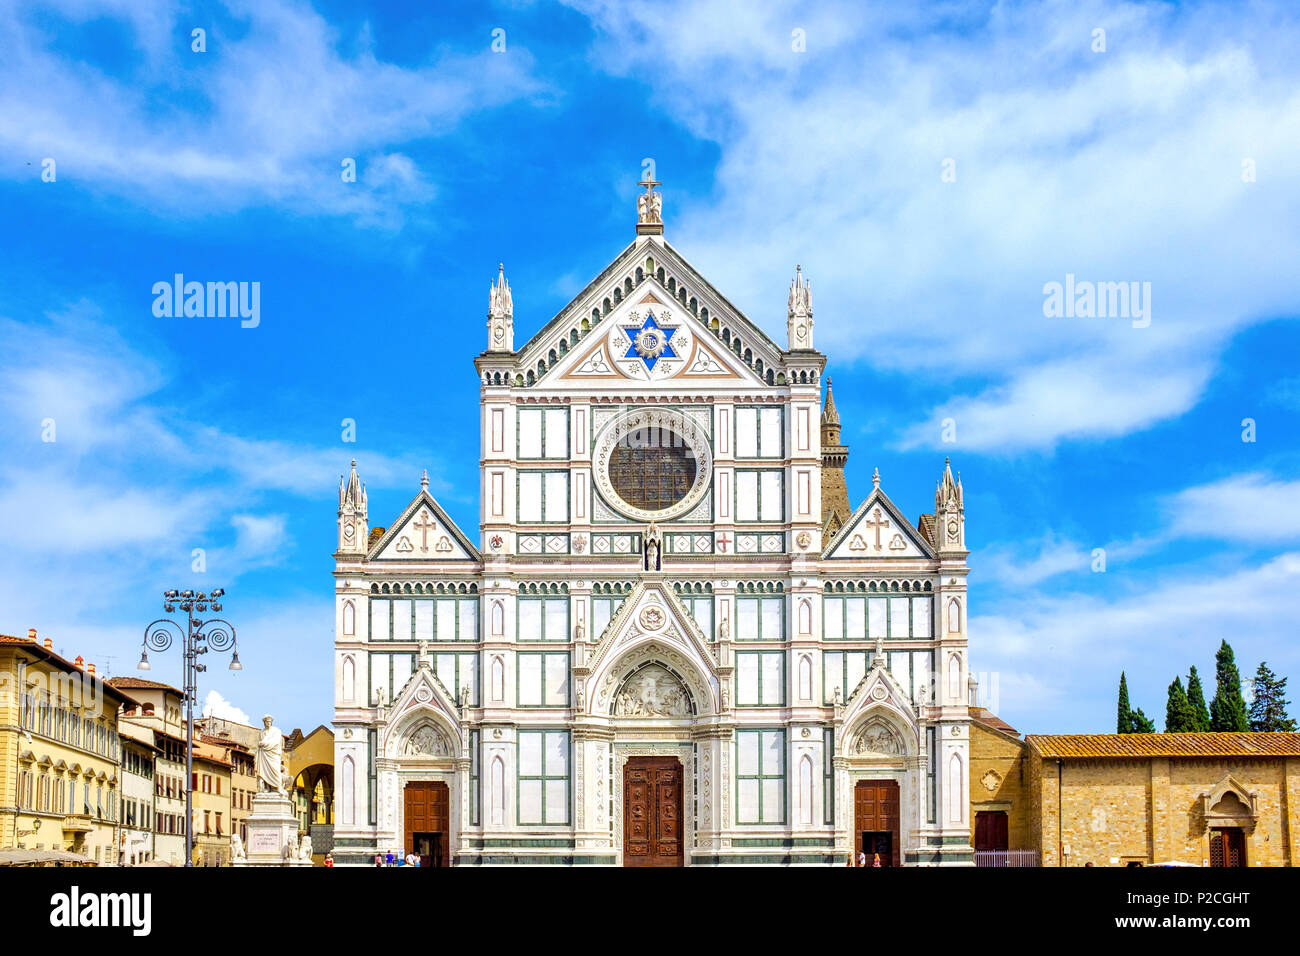 Basilica di Santa Croce, Firenze, Italy Stock Photo